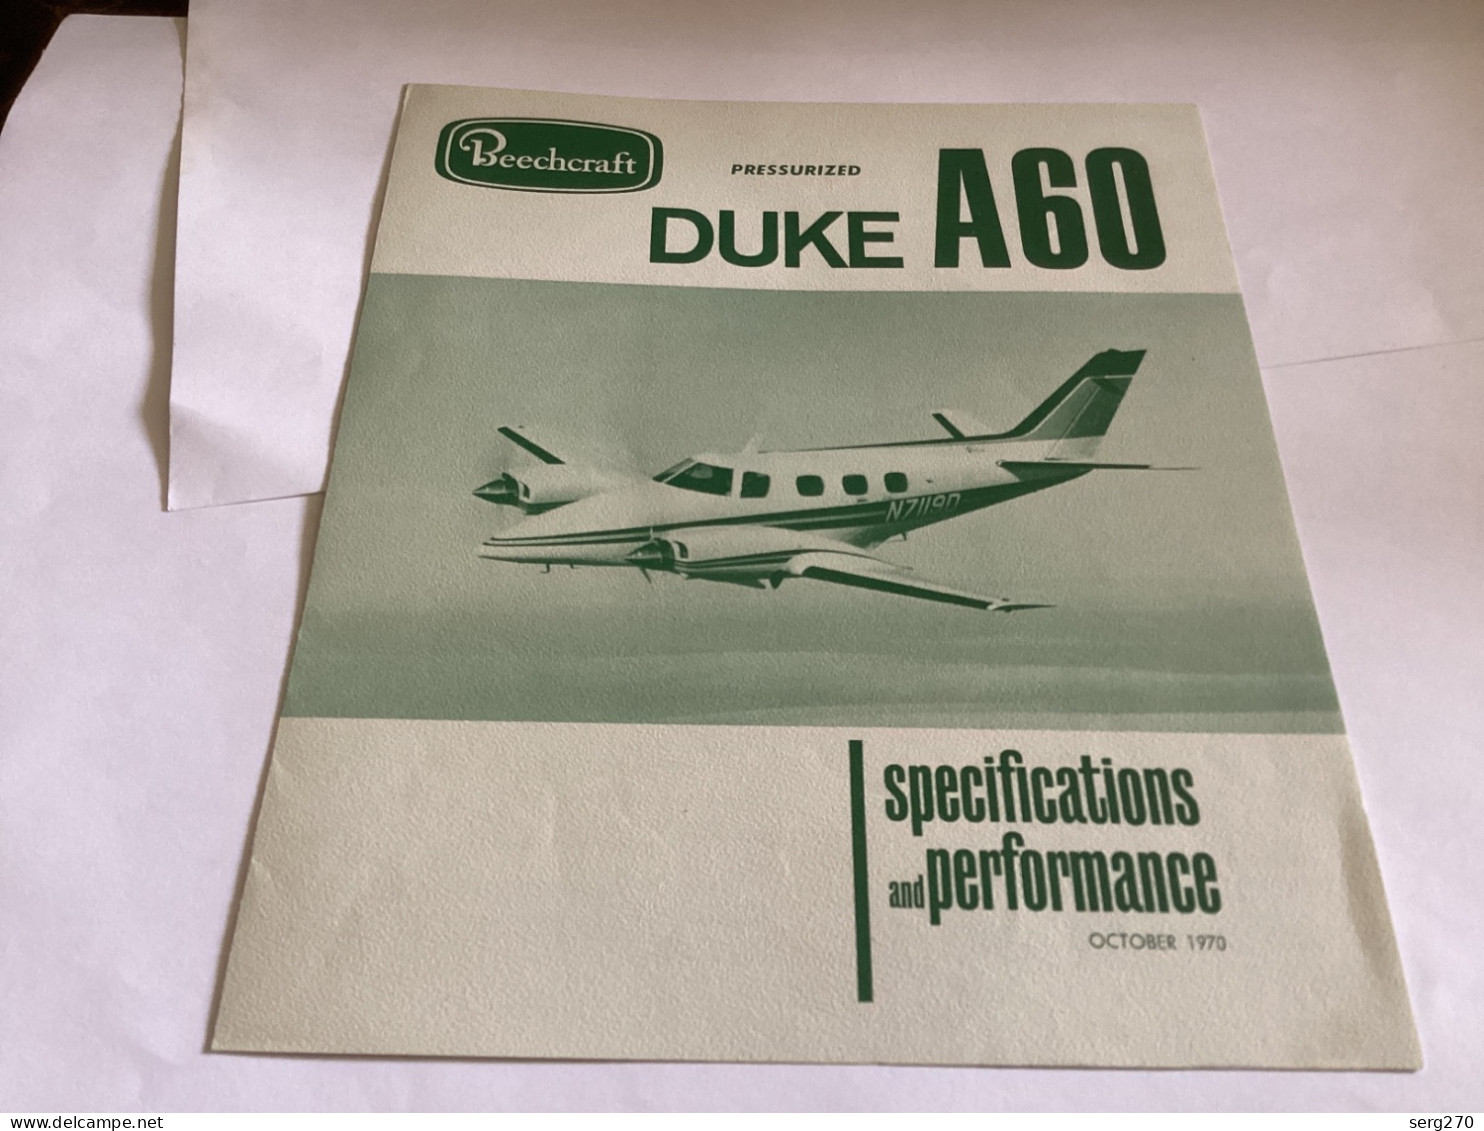 Avion Aviation Beecheraft PRESSURIZIO DUKE AGI 1970 Specifications And Performance OCTOBER 1970 - Transportes